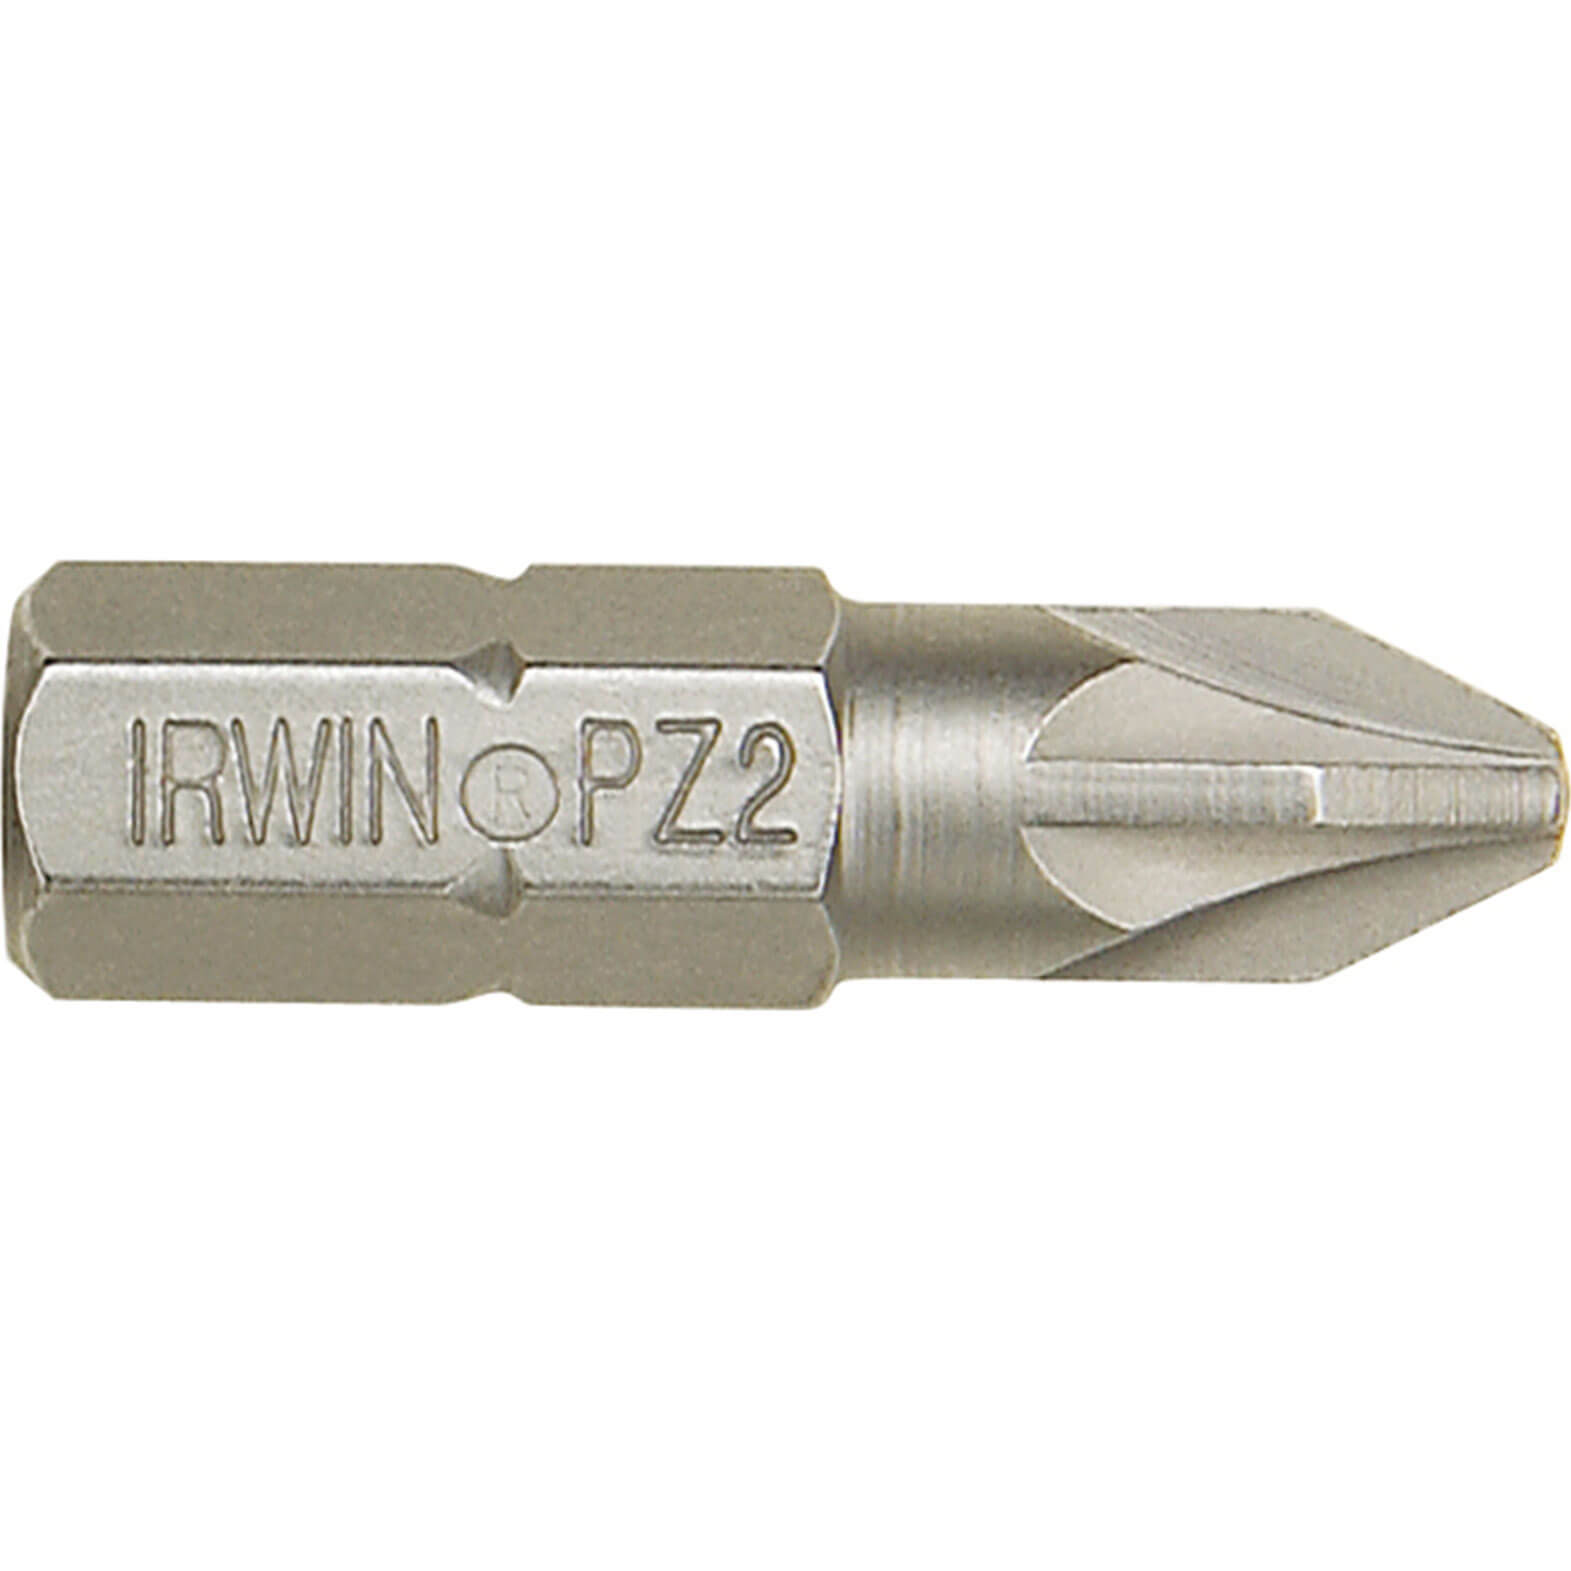 Image of Irwin Pozi Screwdriver Bit PZ2 25mm Pack of 2